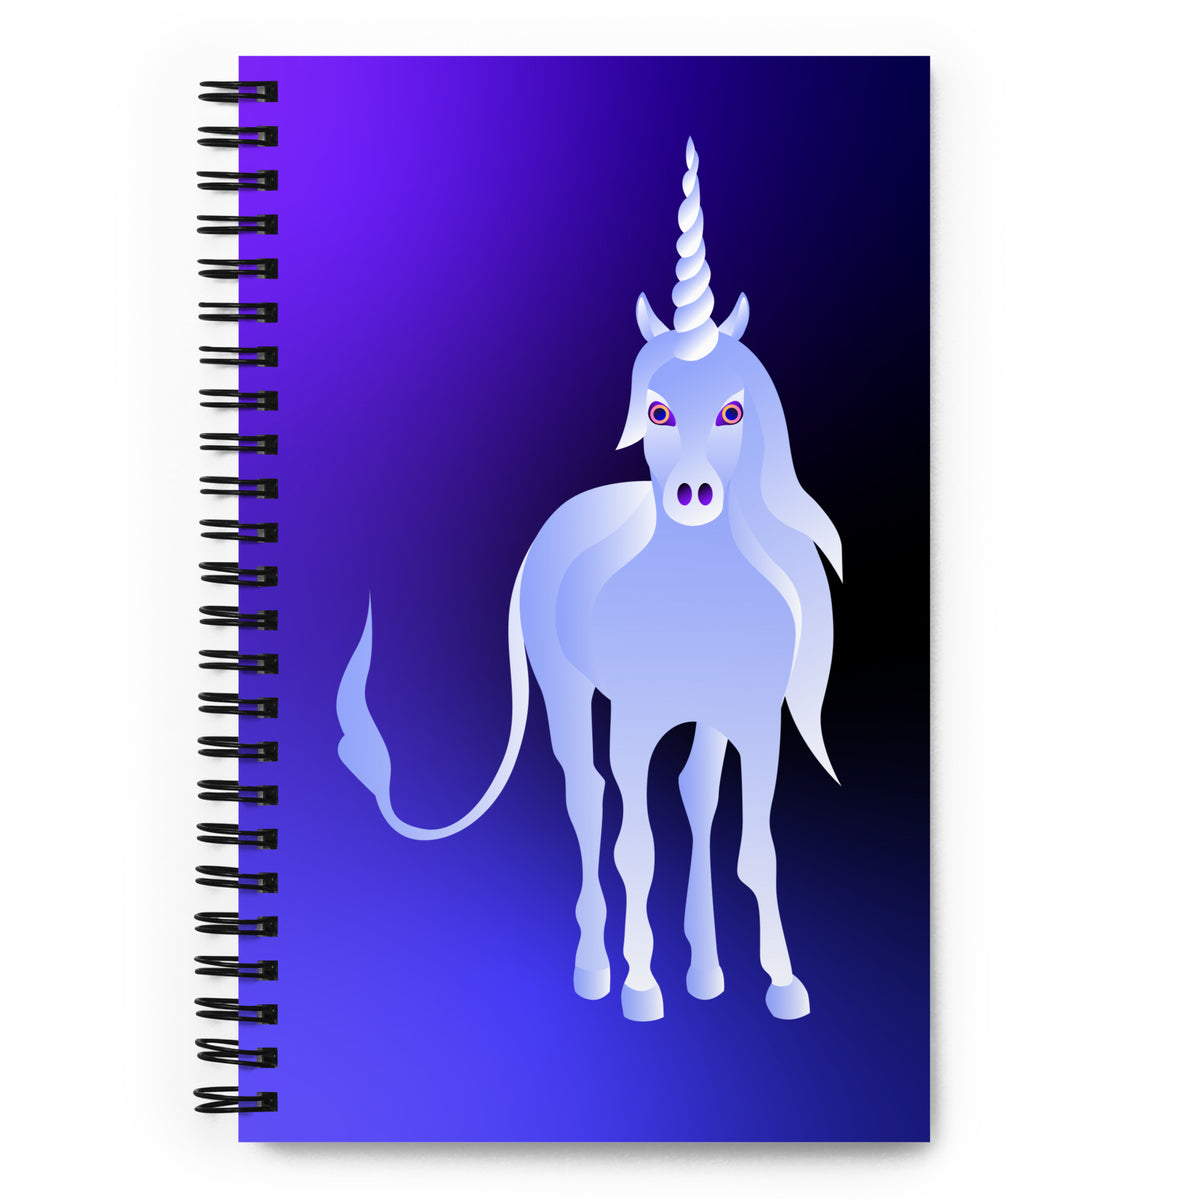 Unicorn Journal